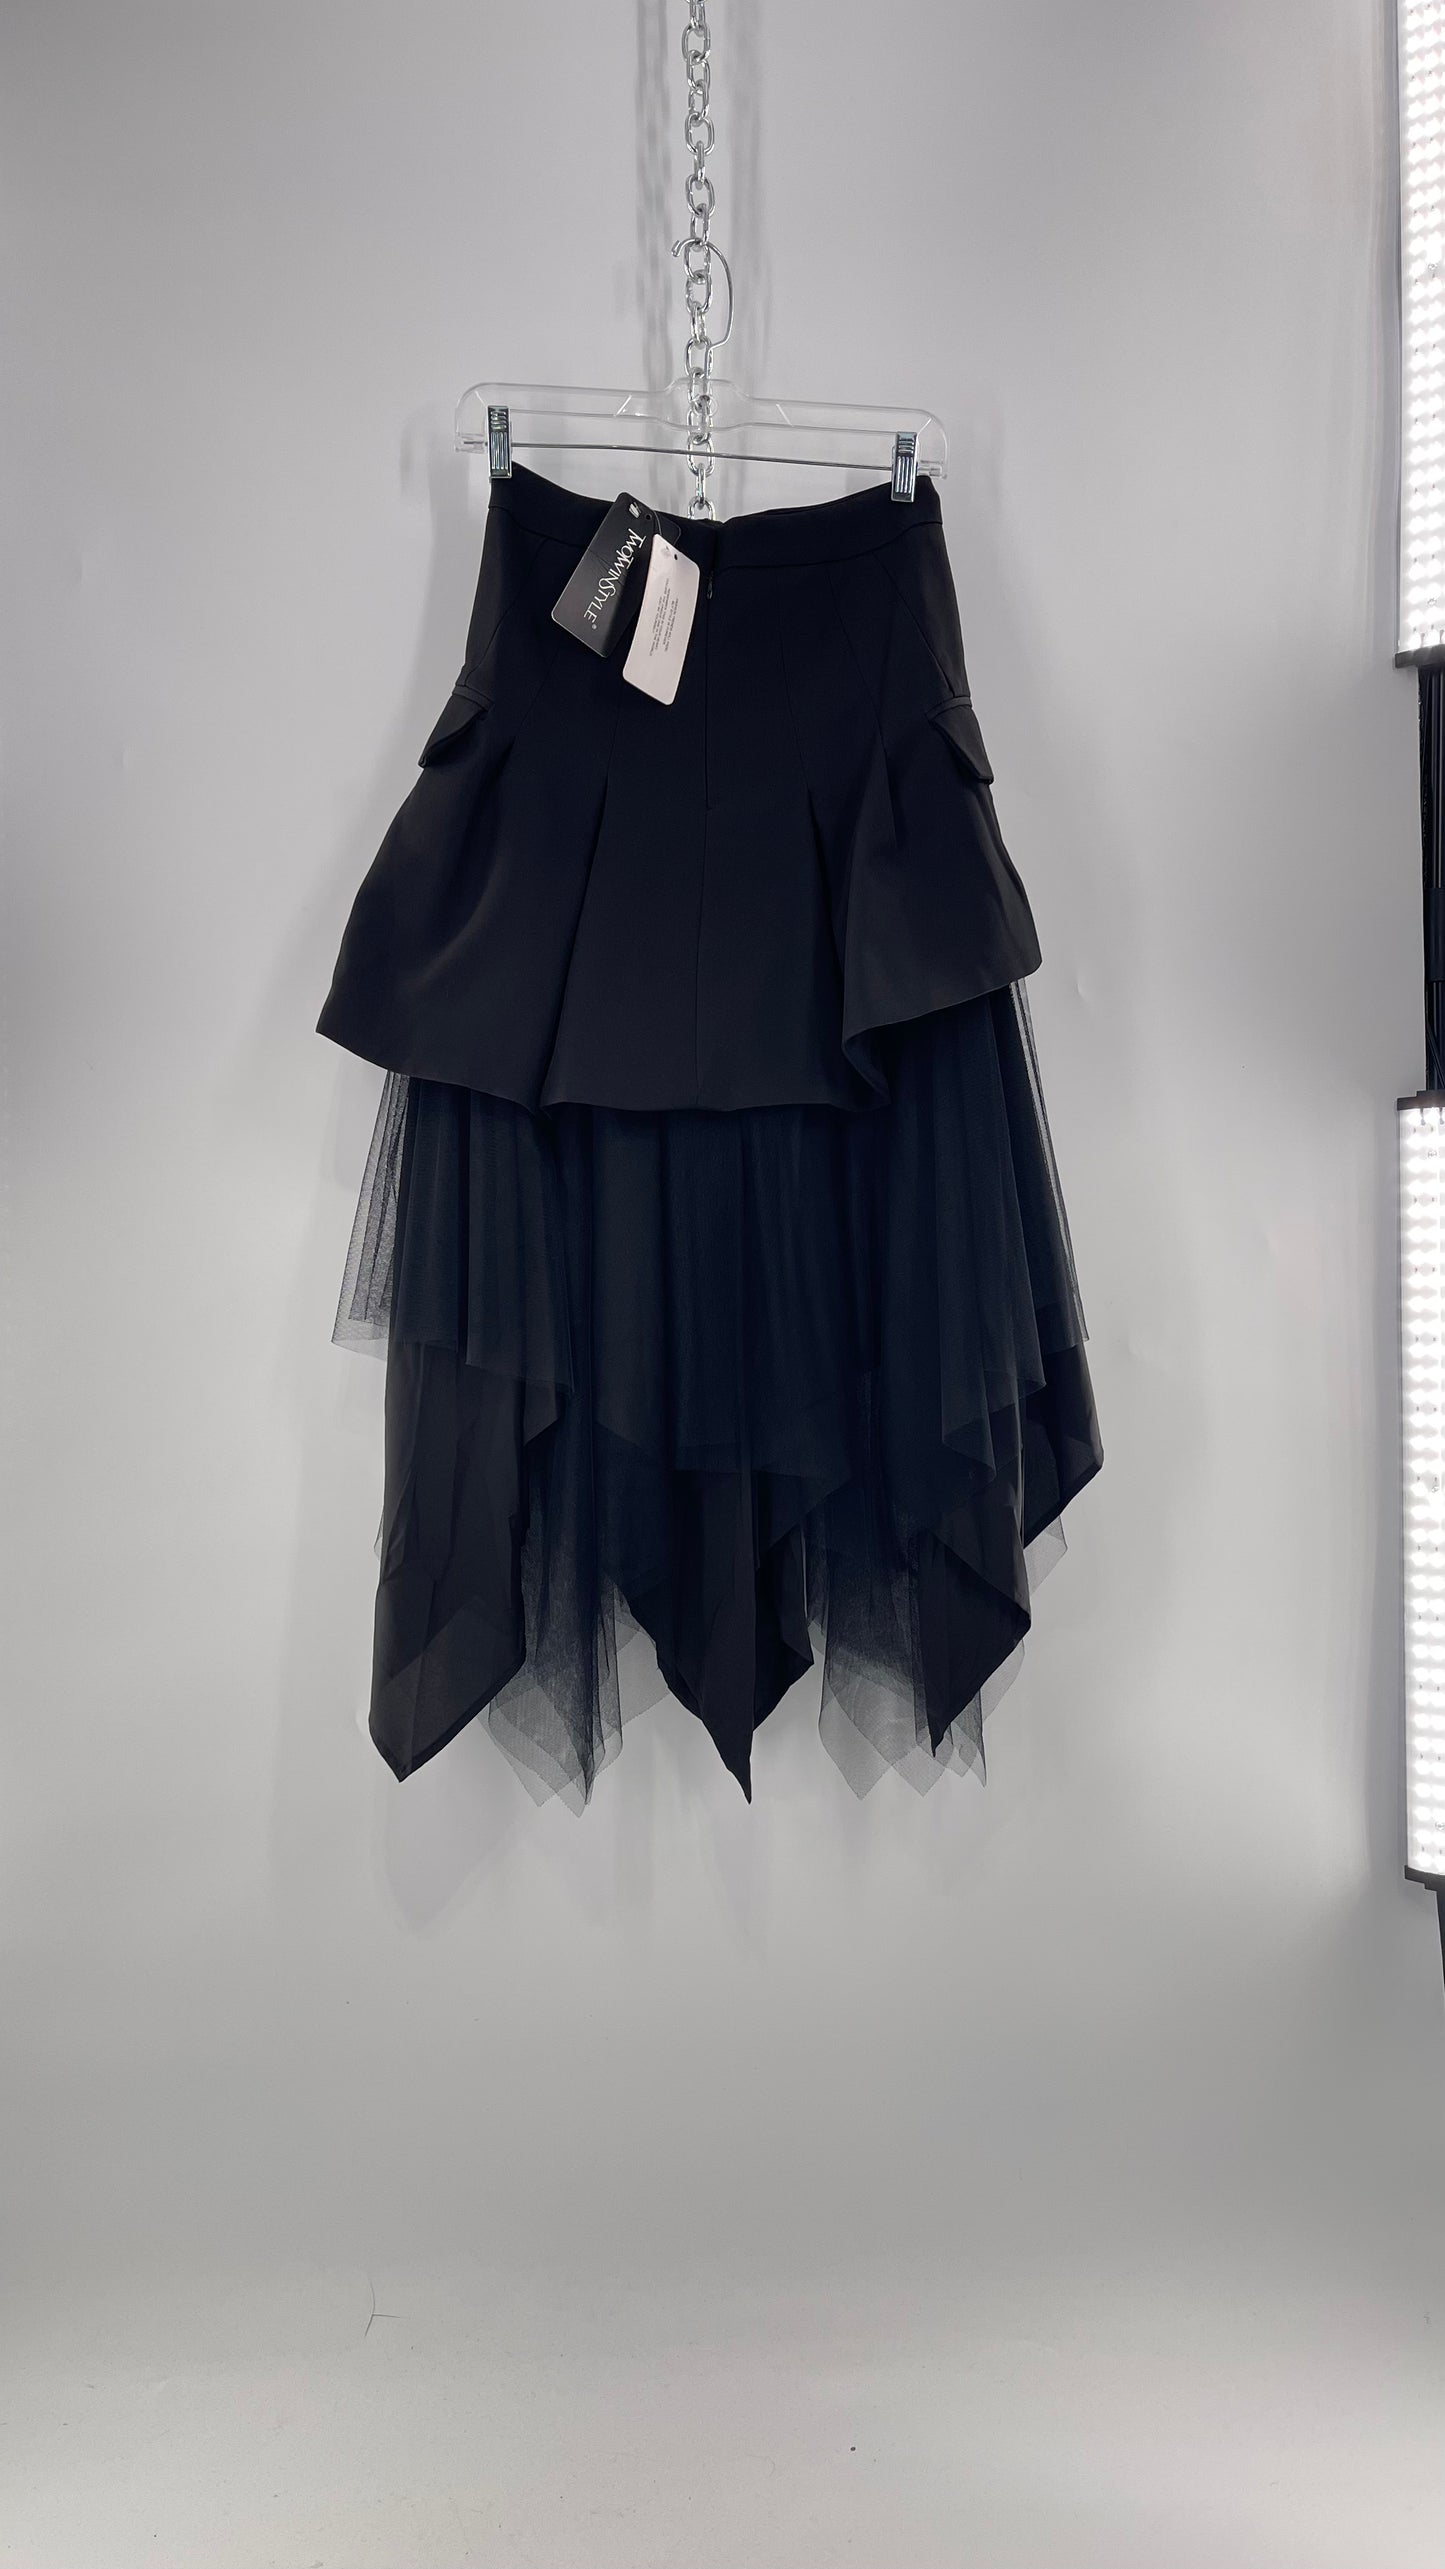 Two Twin Style Black Blazer Skirt with Mesh Tulle Layered Handkerchief Hem (S)